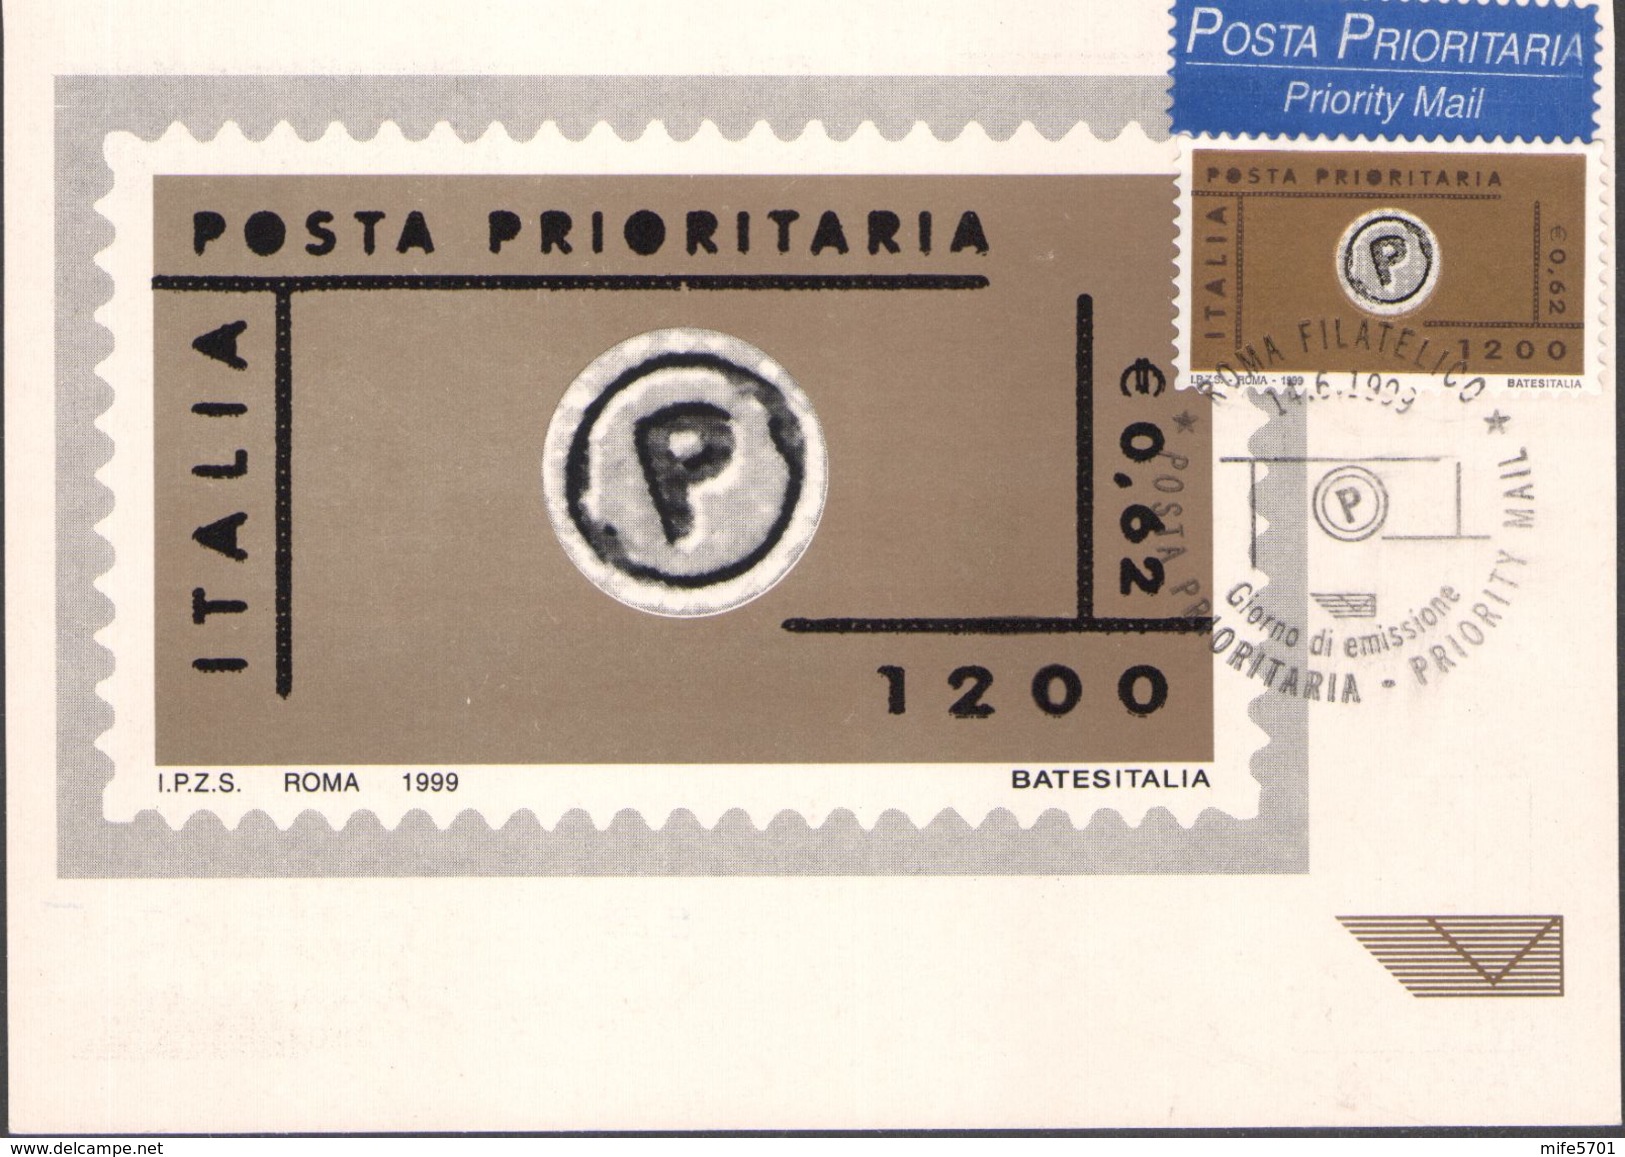 MAXCARD - CARTOLINA POSTA PRIORITARIA FRANCOBOLLO DA L. 1200 EURO 0,62 - 14.6.1999 - CATALOGO SASSONE: 2419 - FDC - Maximum Cards